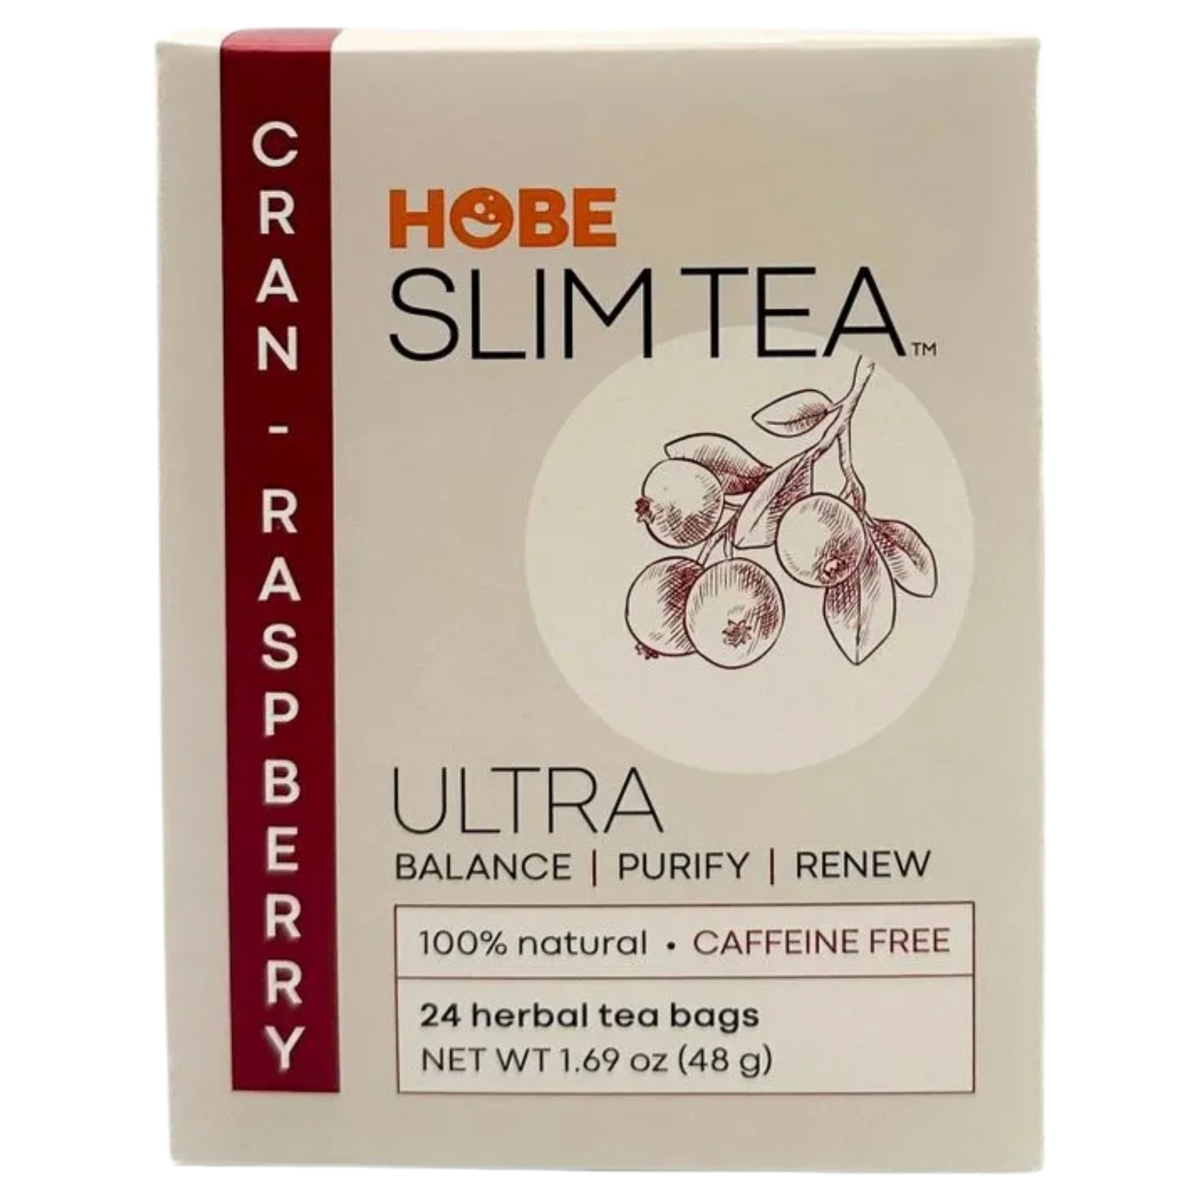 Hobe Slim Tea - Cran. Raspberry (24ct.)